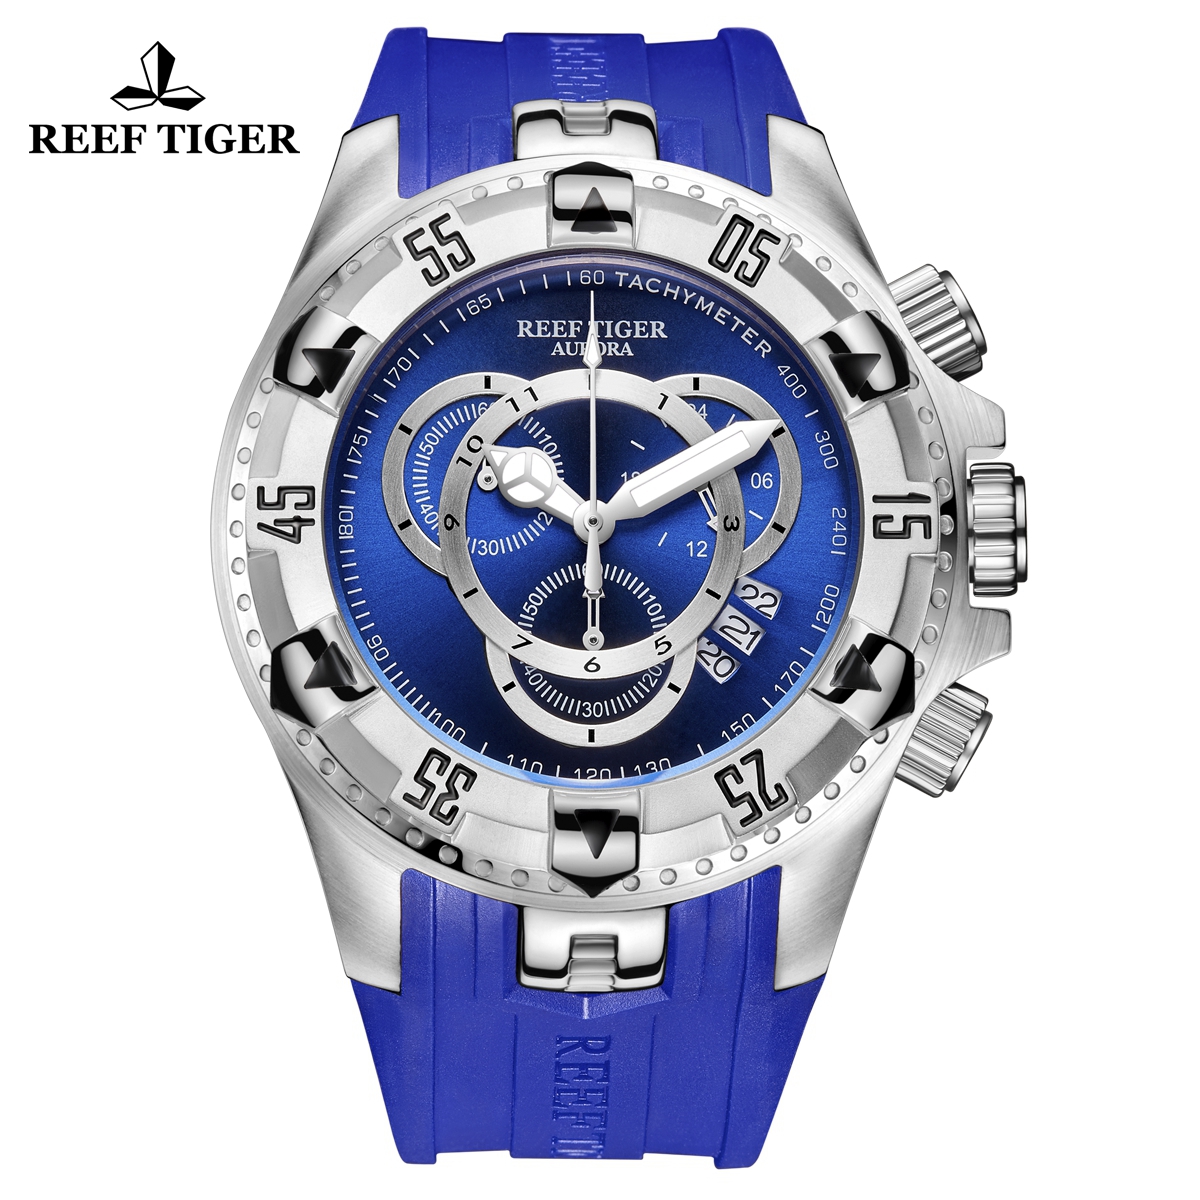 Reef Tiger Aurora Hercules II Fashion Steel Rubber Strap Blue Dial Quartz Watch RGA303-2-YLL